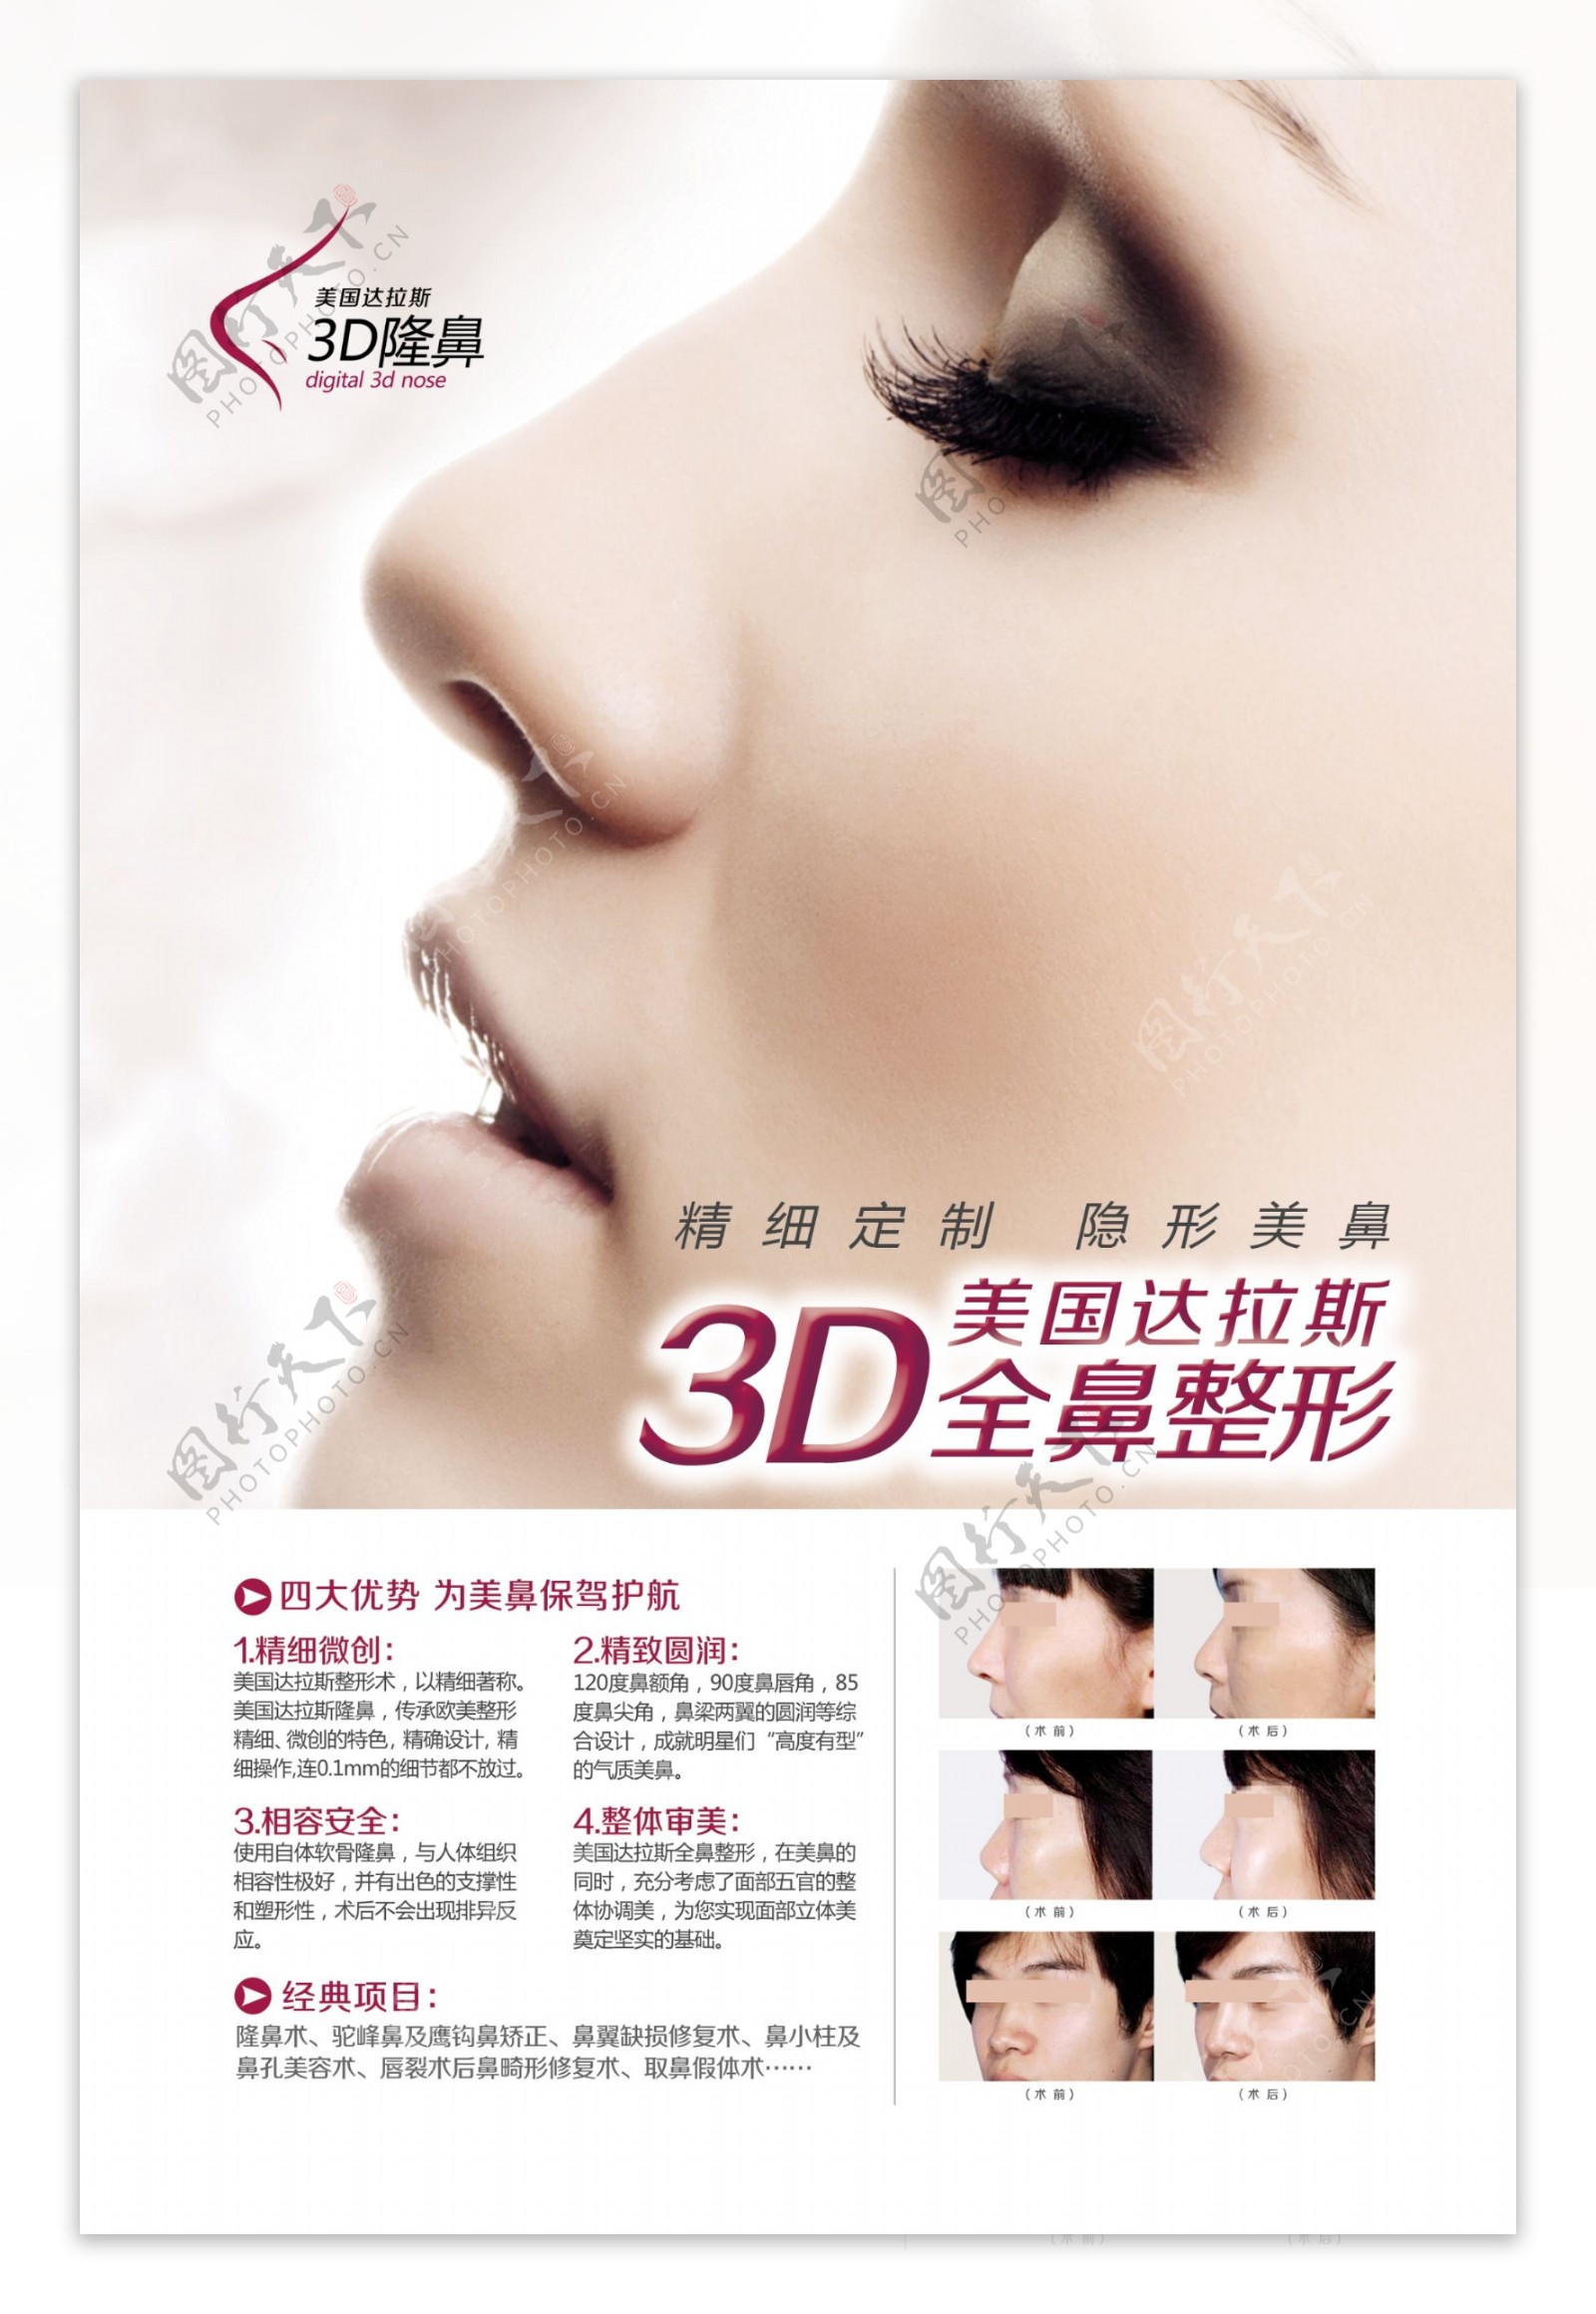 3D全鼻整形术